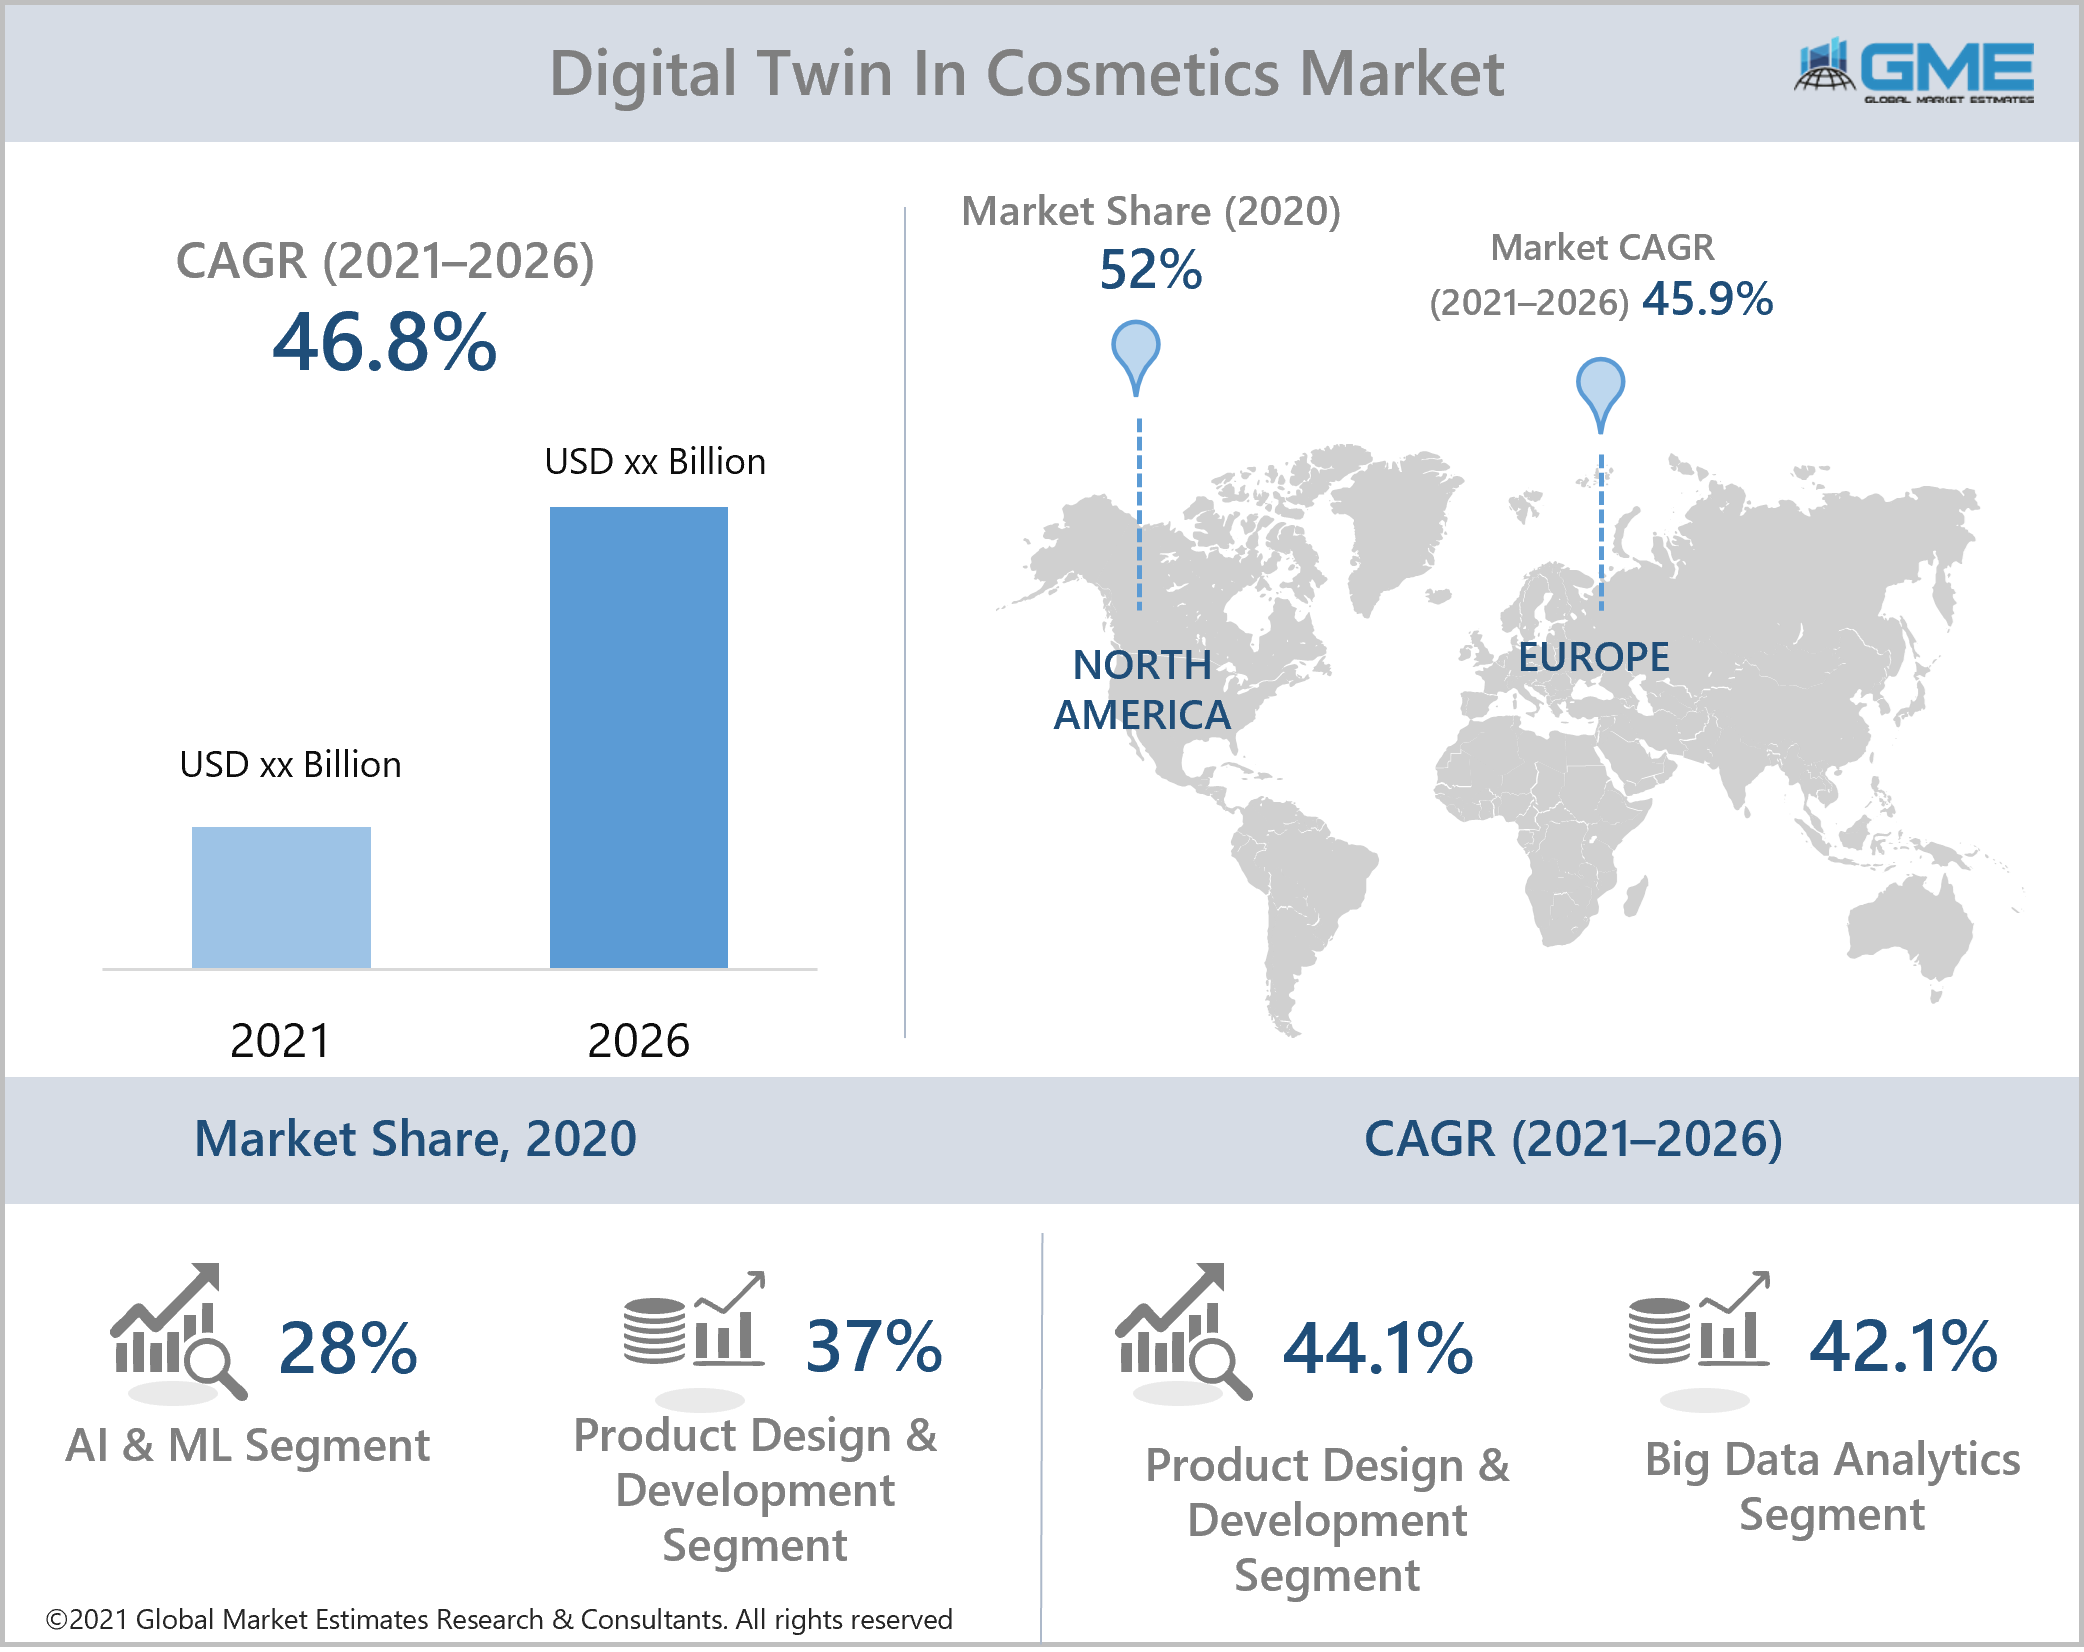 global digital twin in cosmetics market report